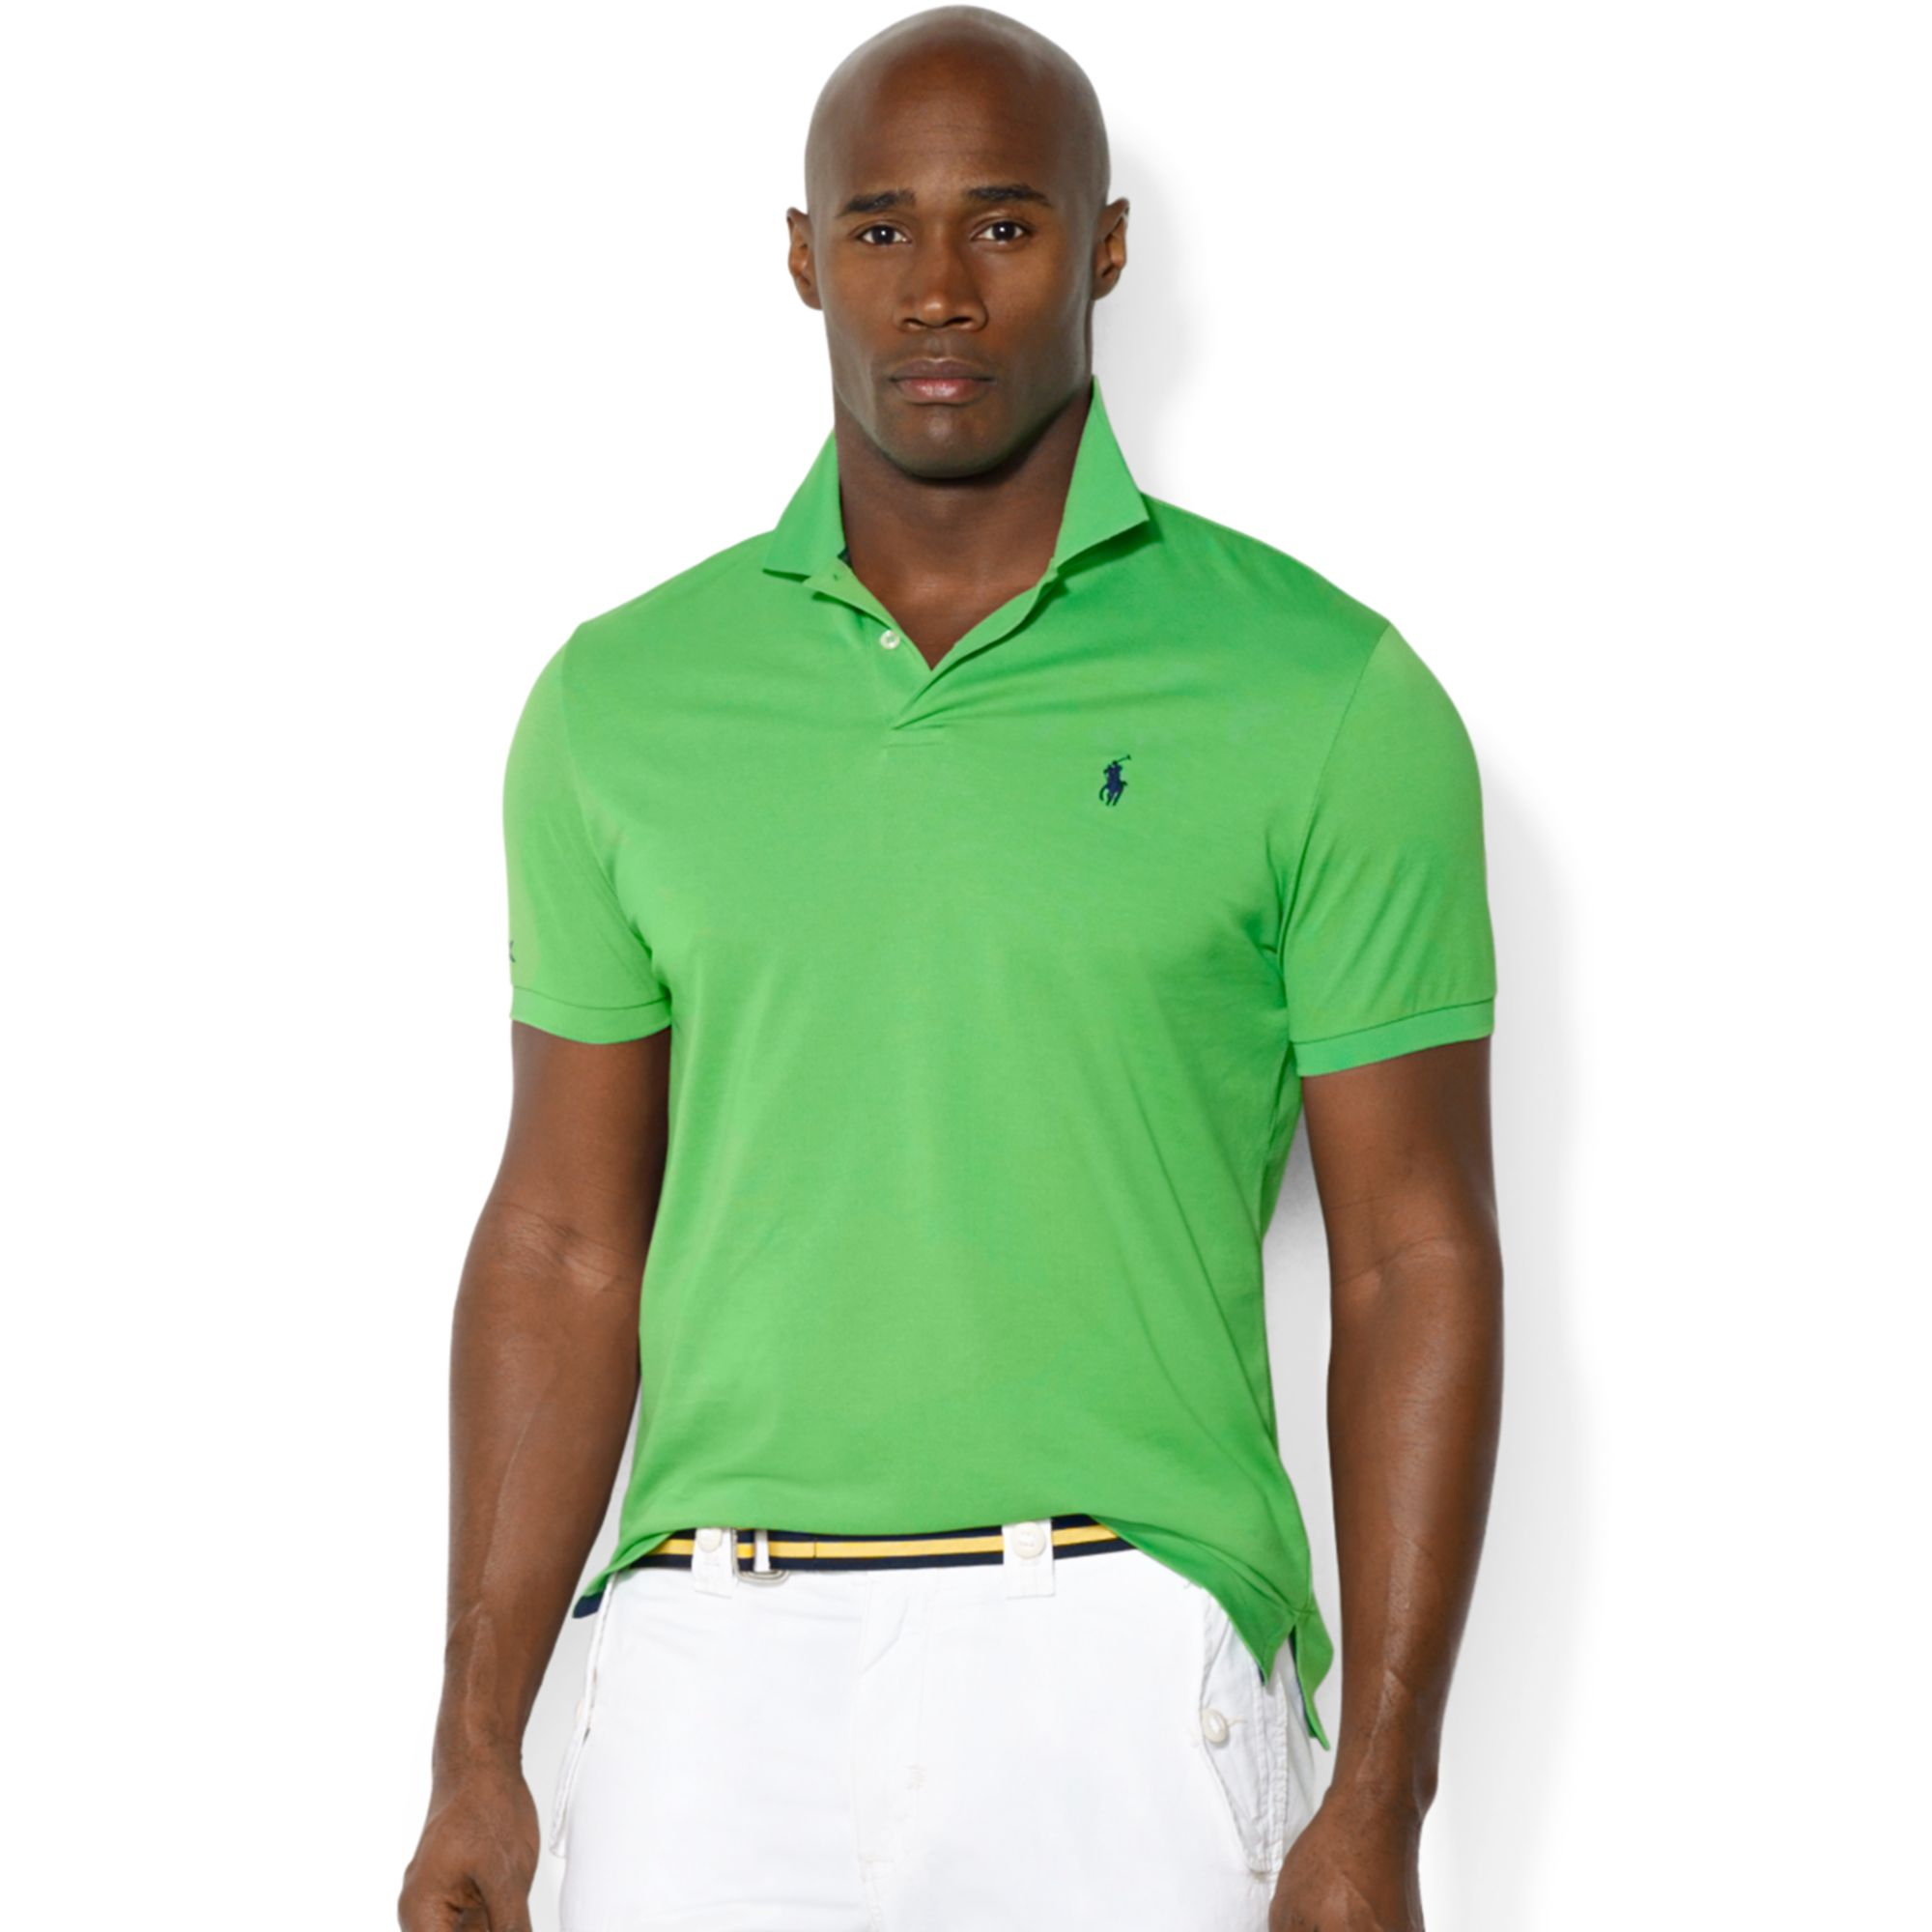 Polo Ralph Lauren Performance Polo Shirt in Green for Men - Lyst